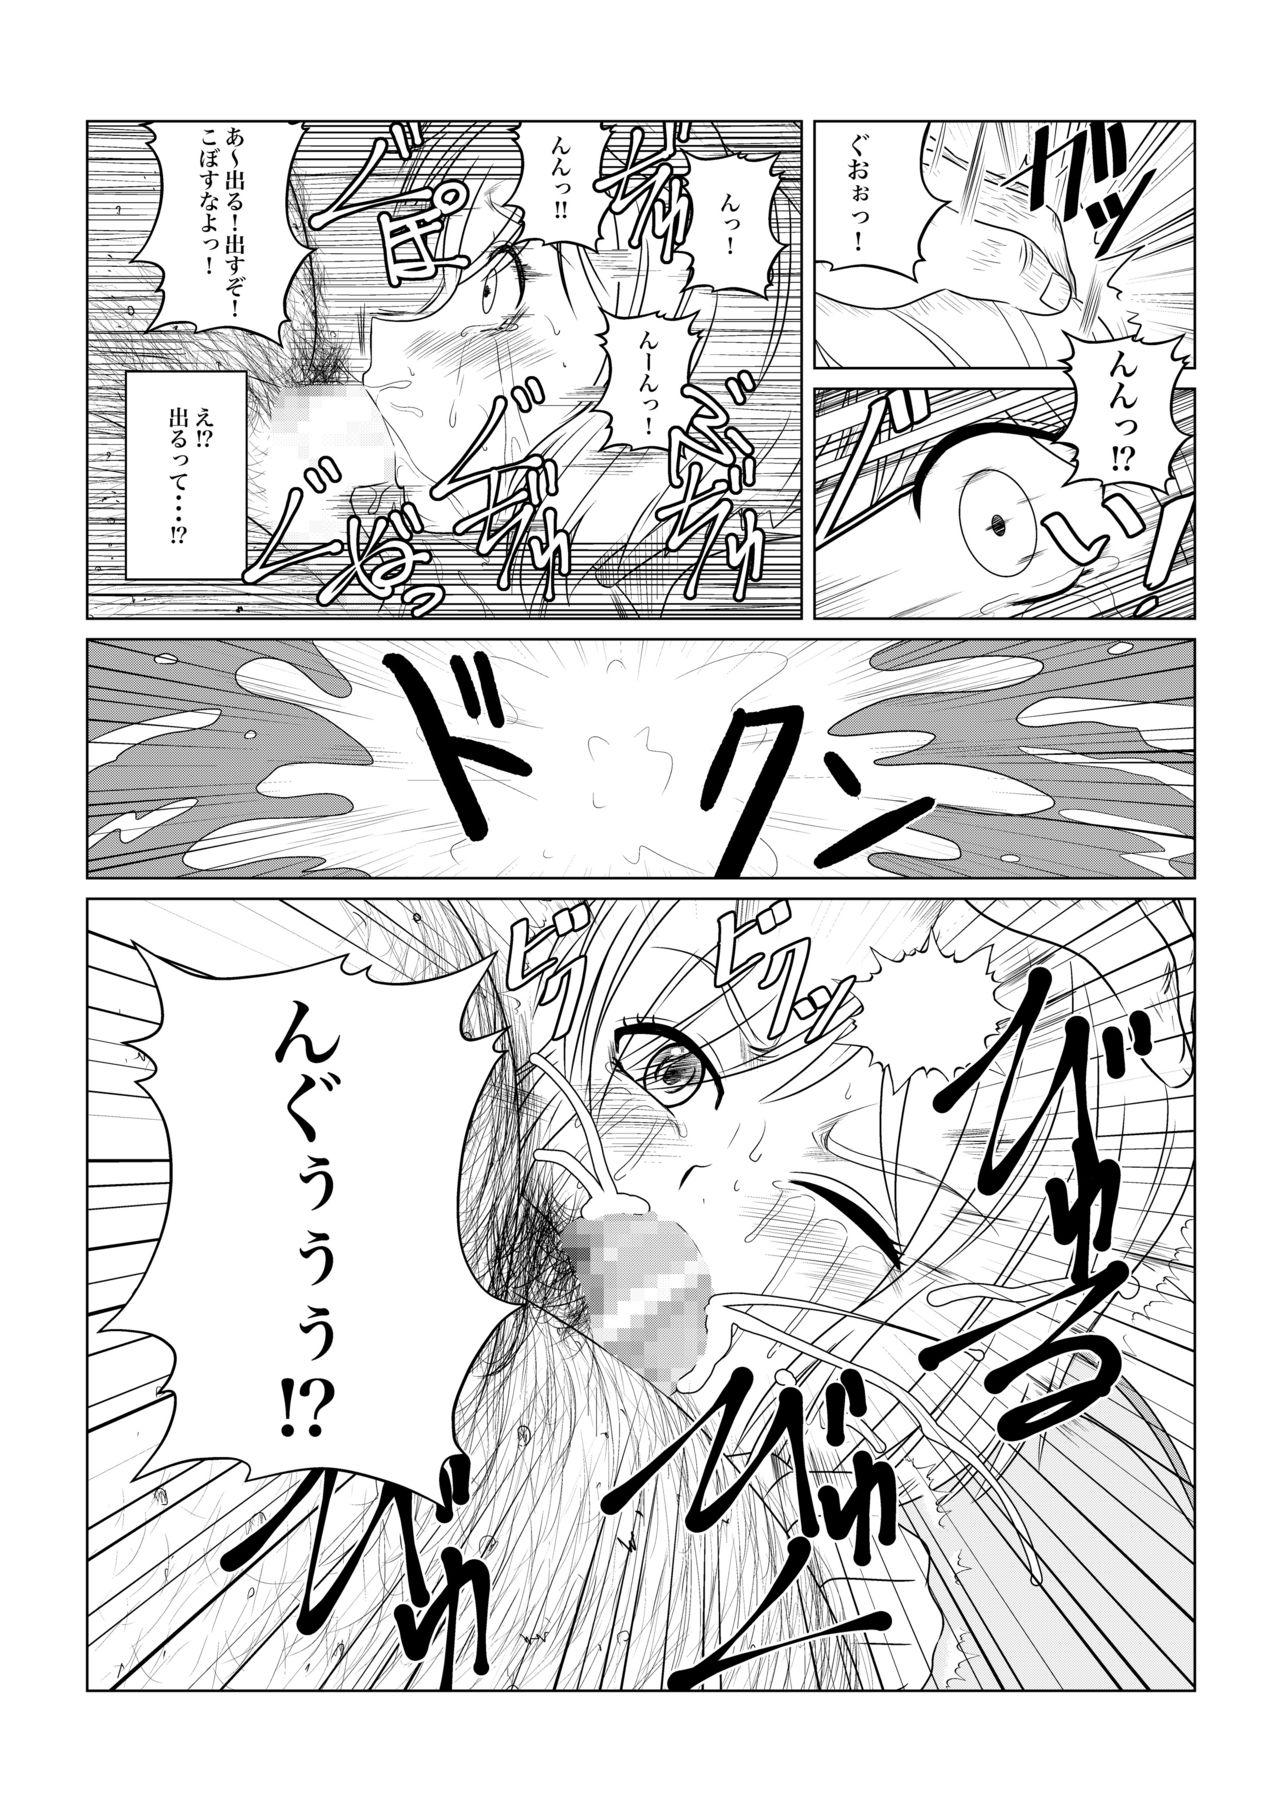 Beautiful Gekka Midarezaki - Tales of vesperia Blows - Page 12